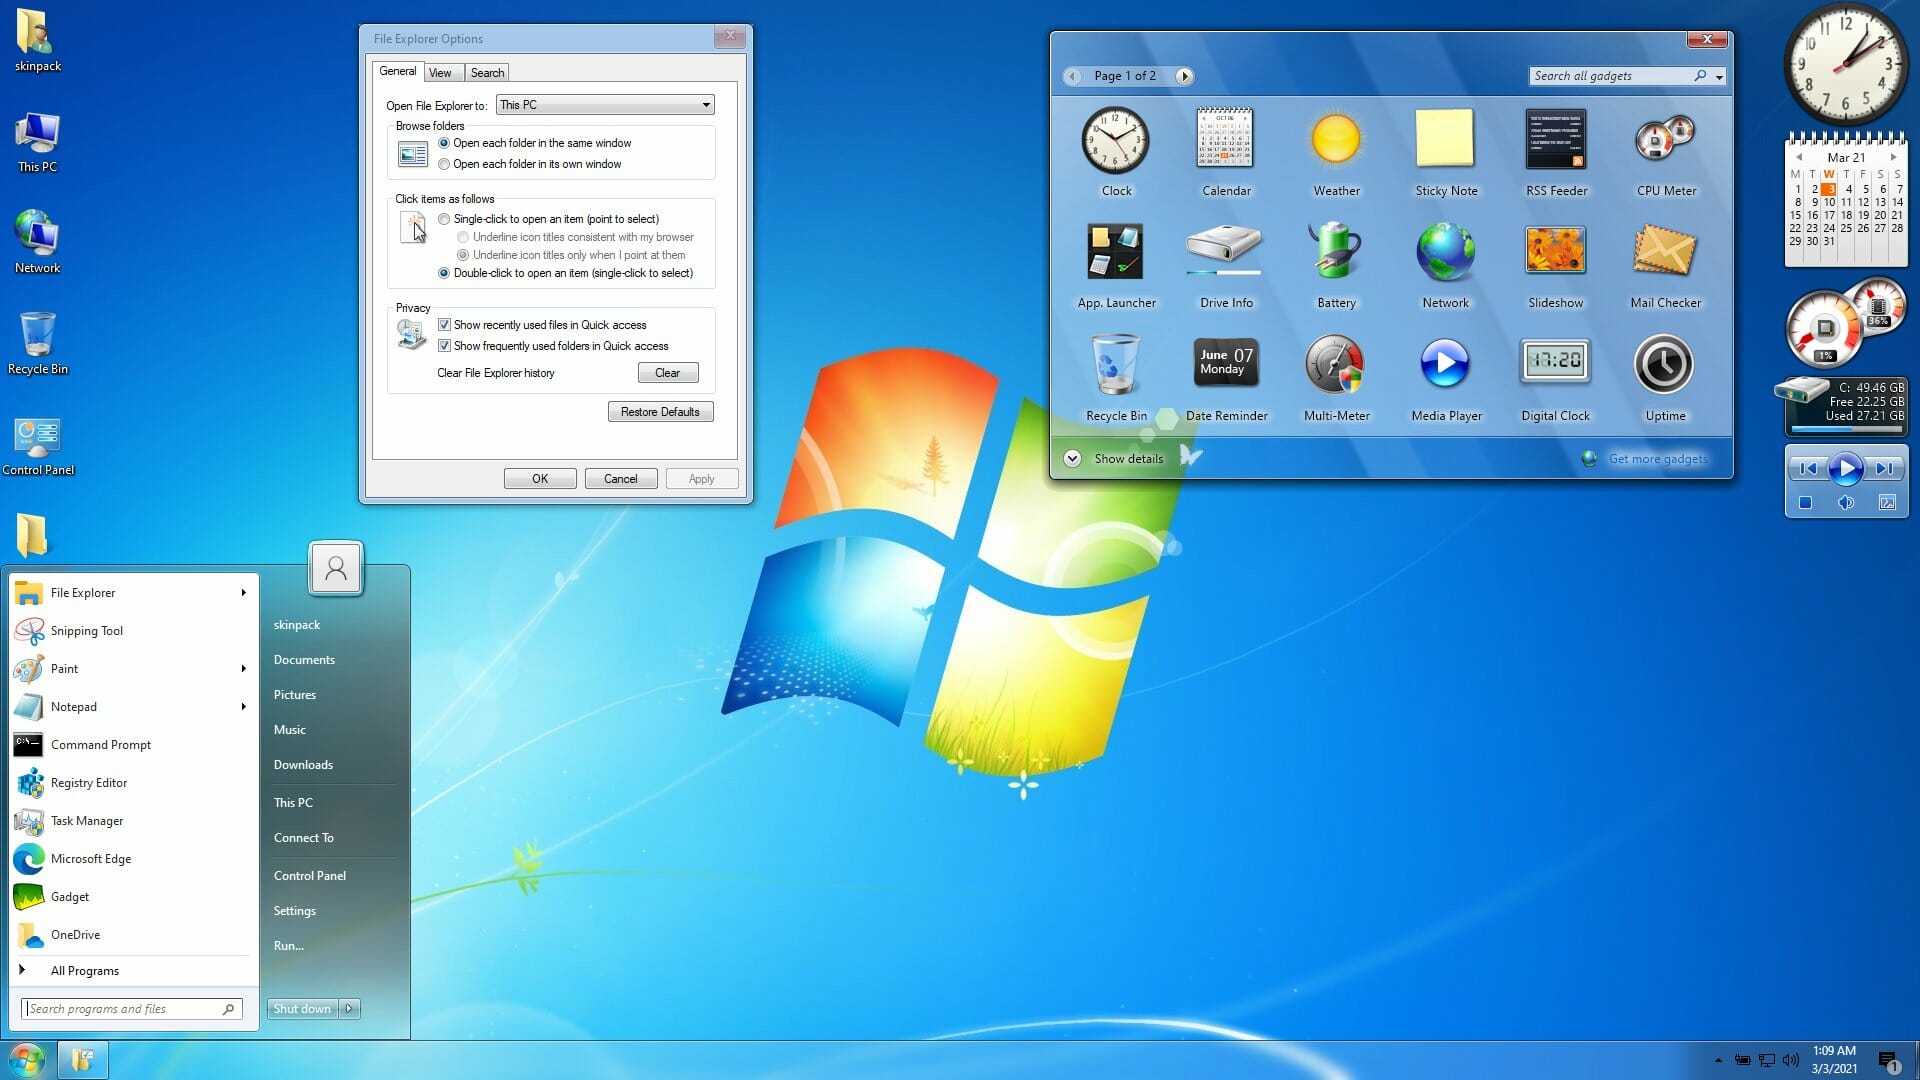 Windows 7 UI